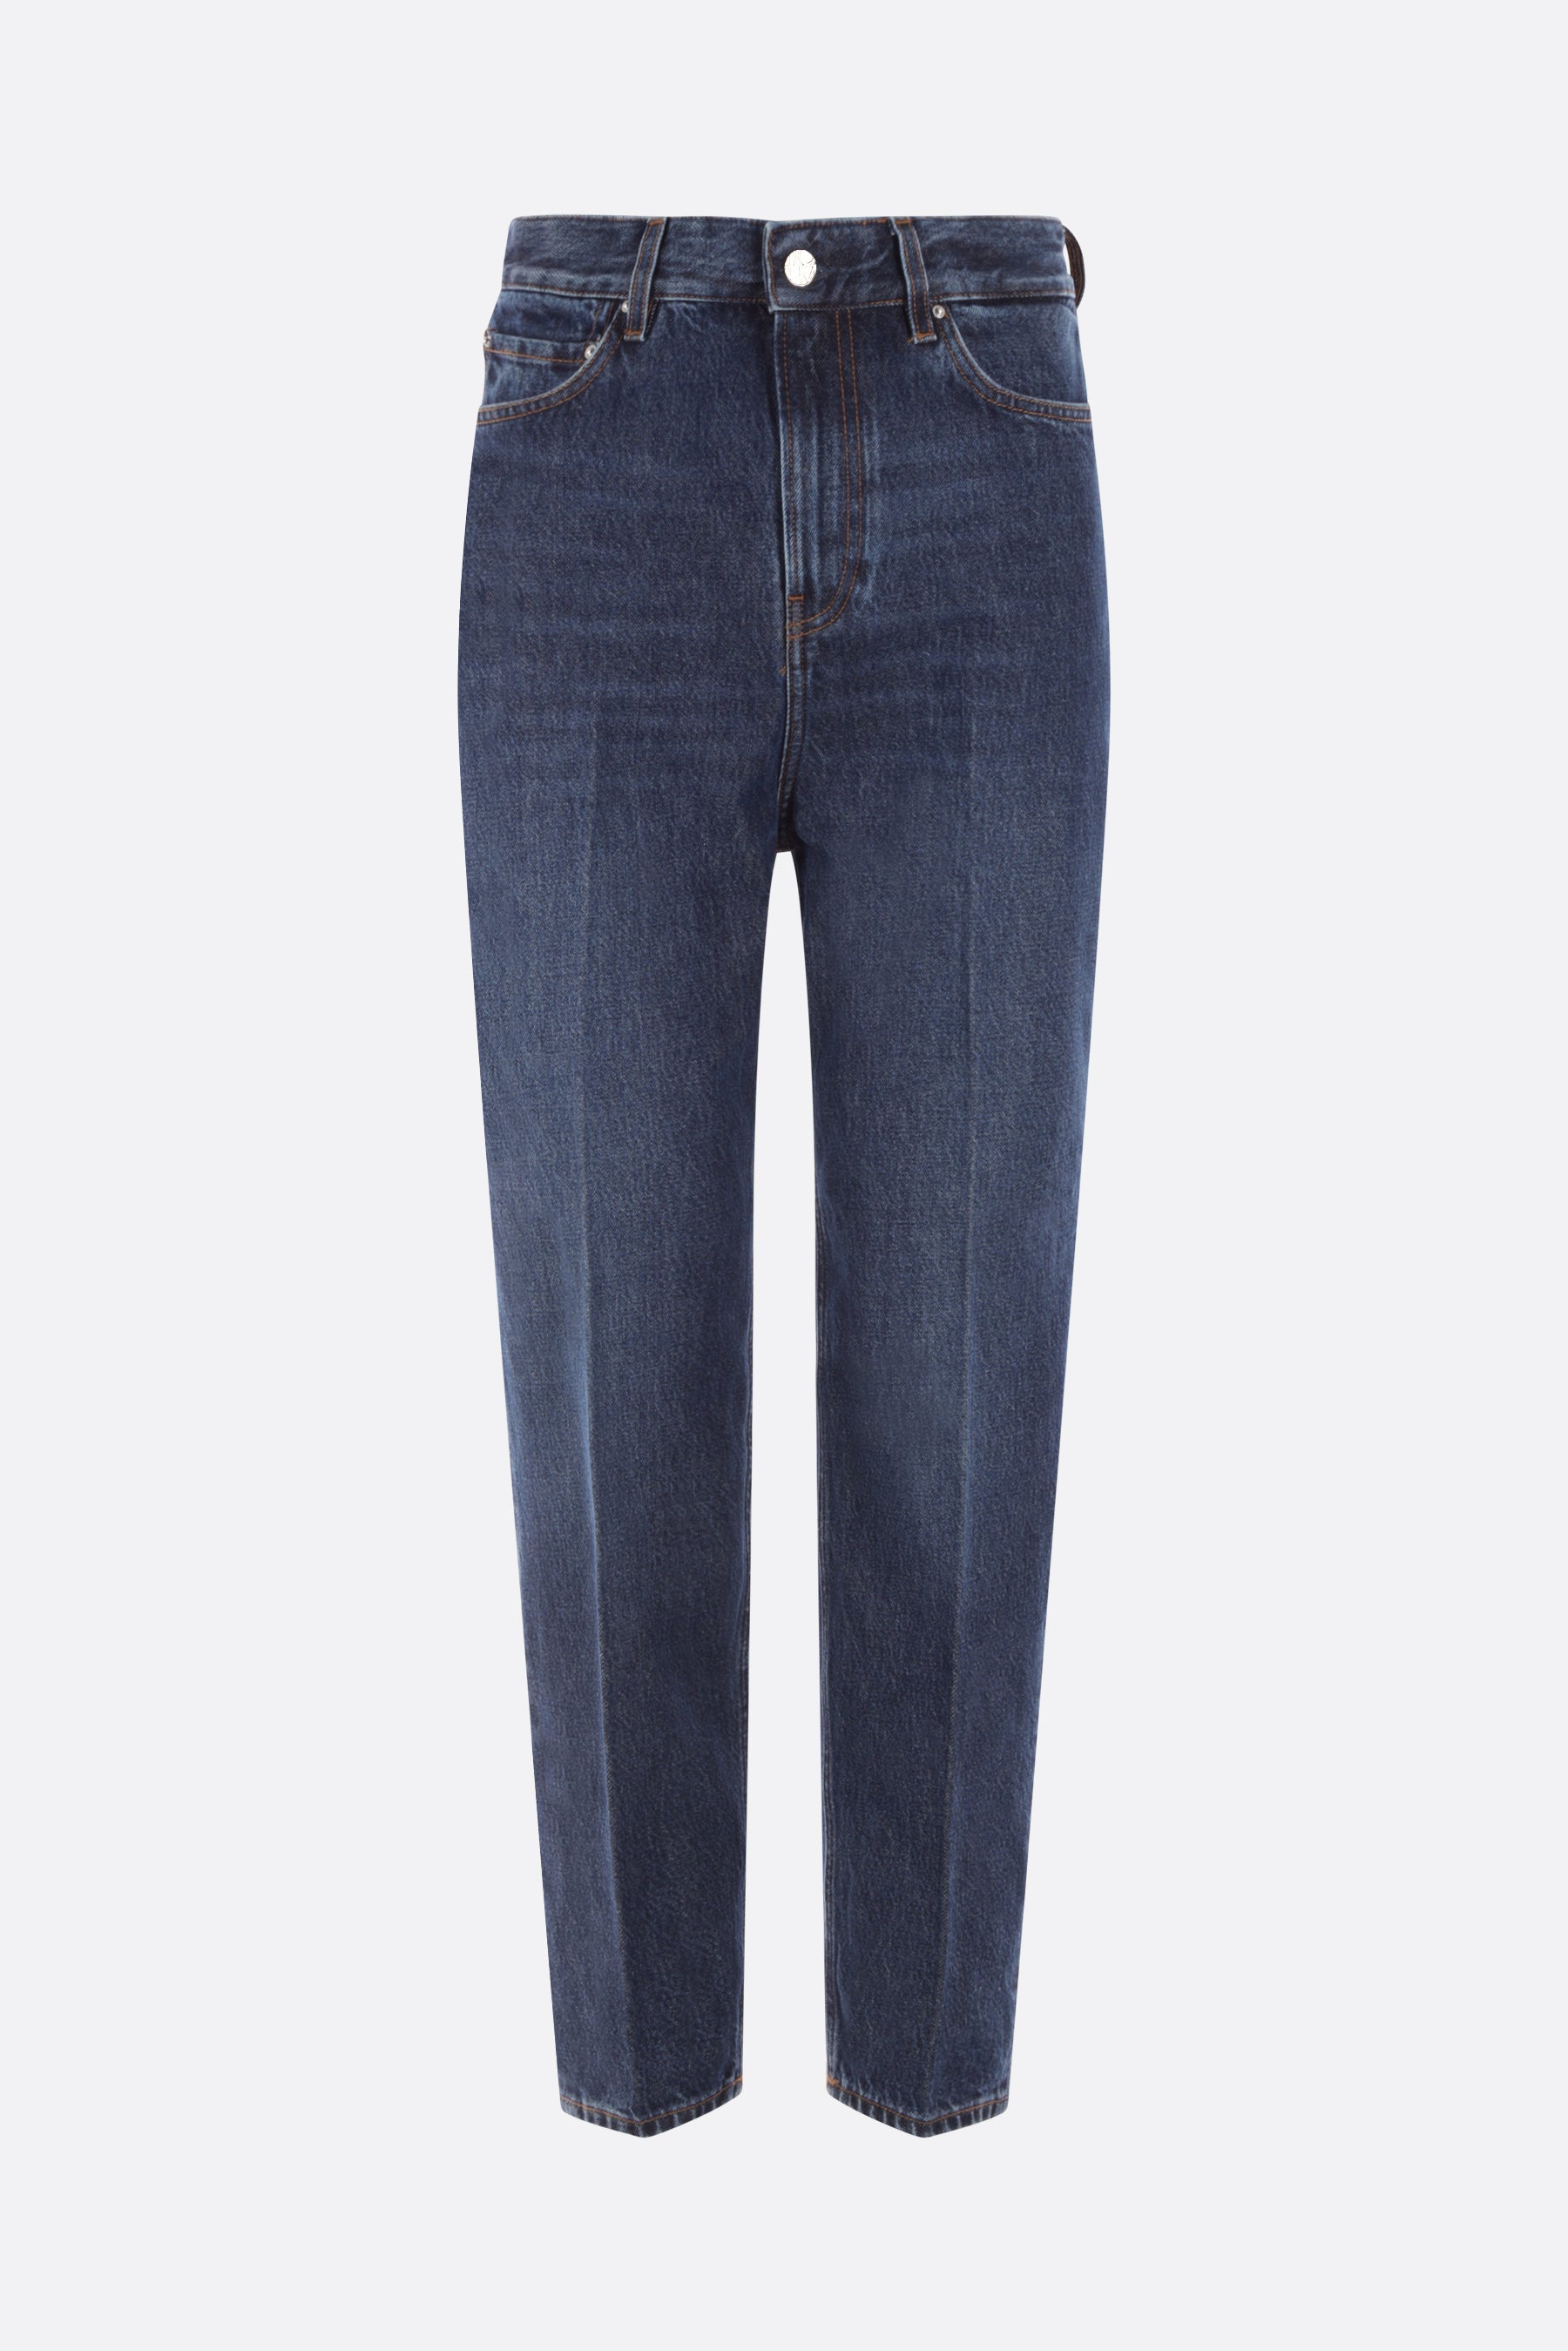 jeans tapered-fit in denim organico